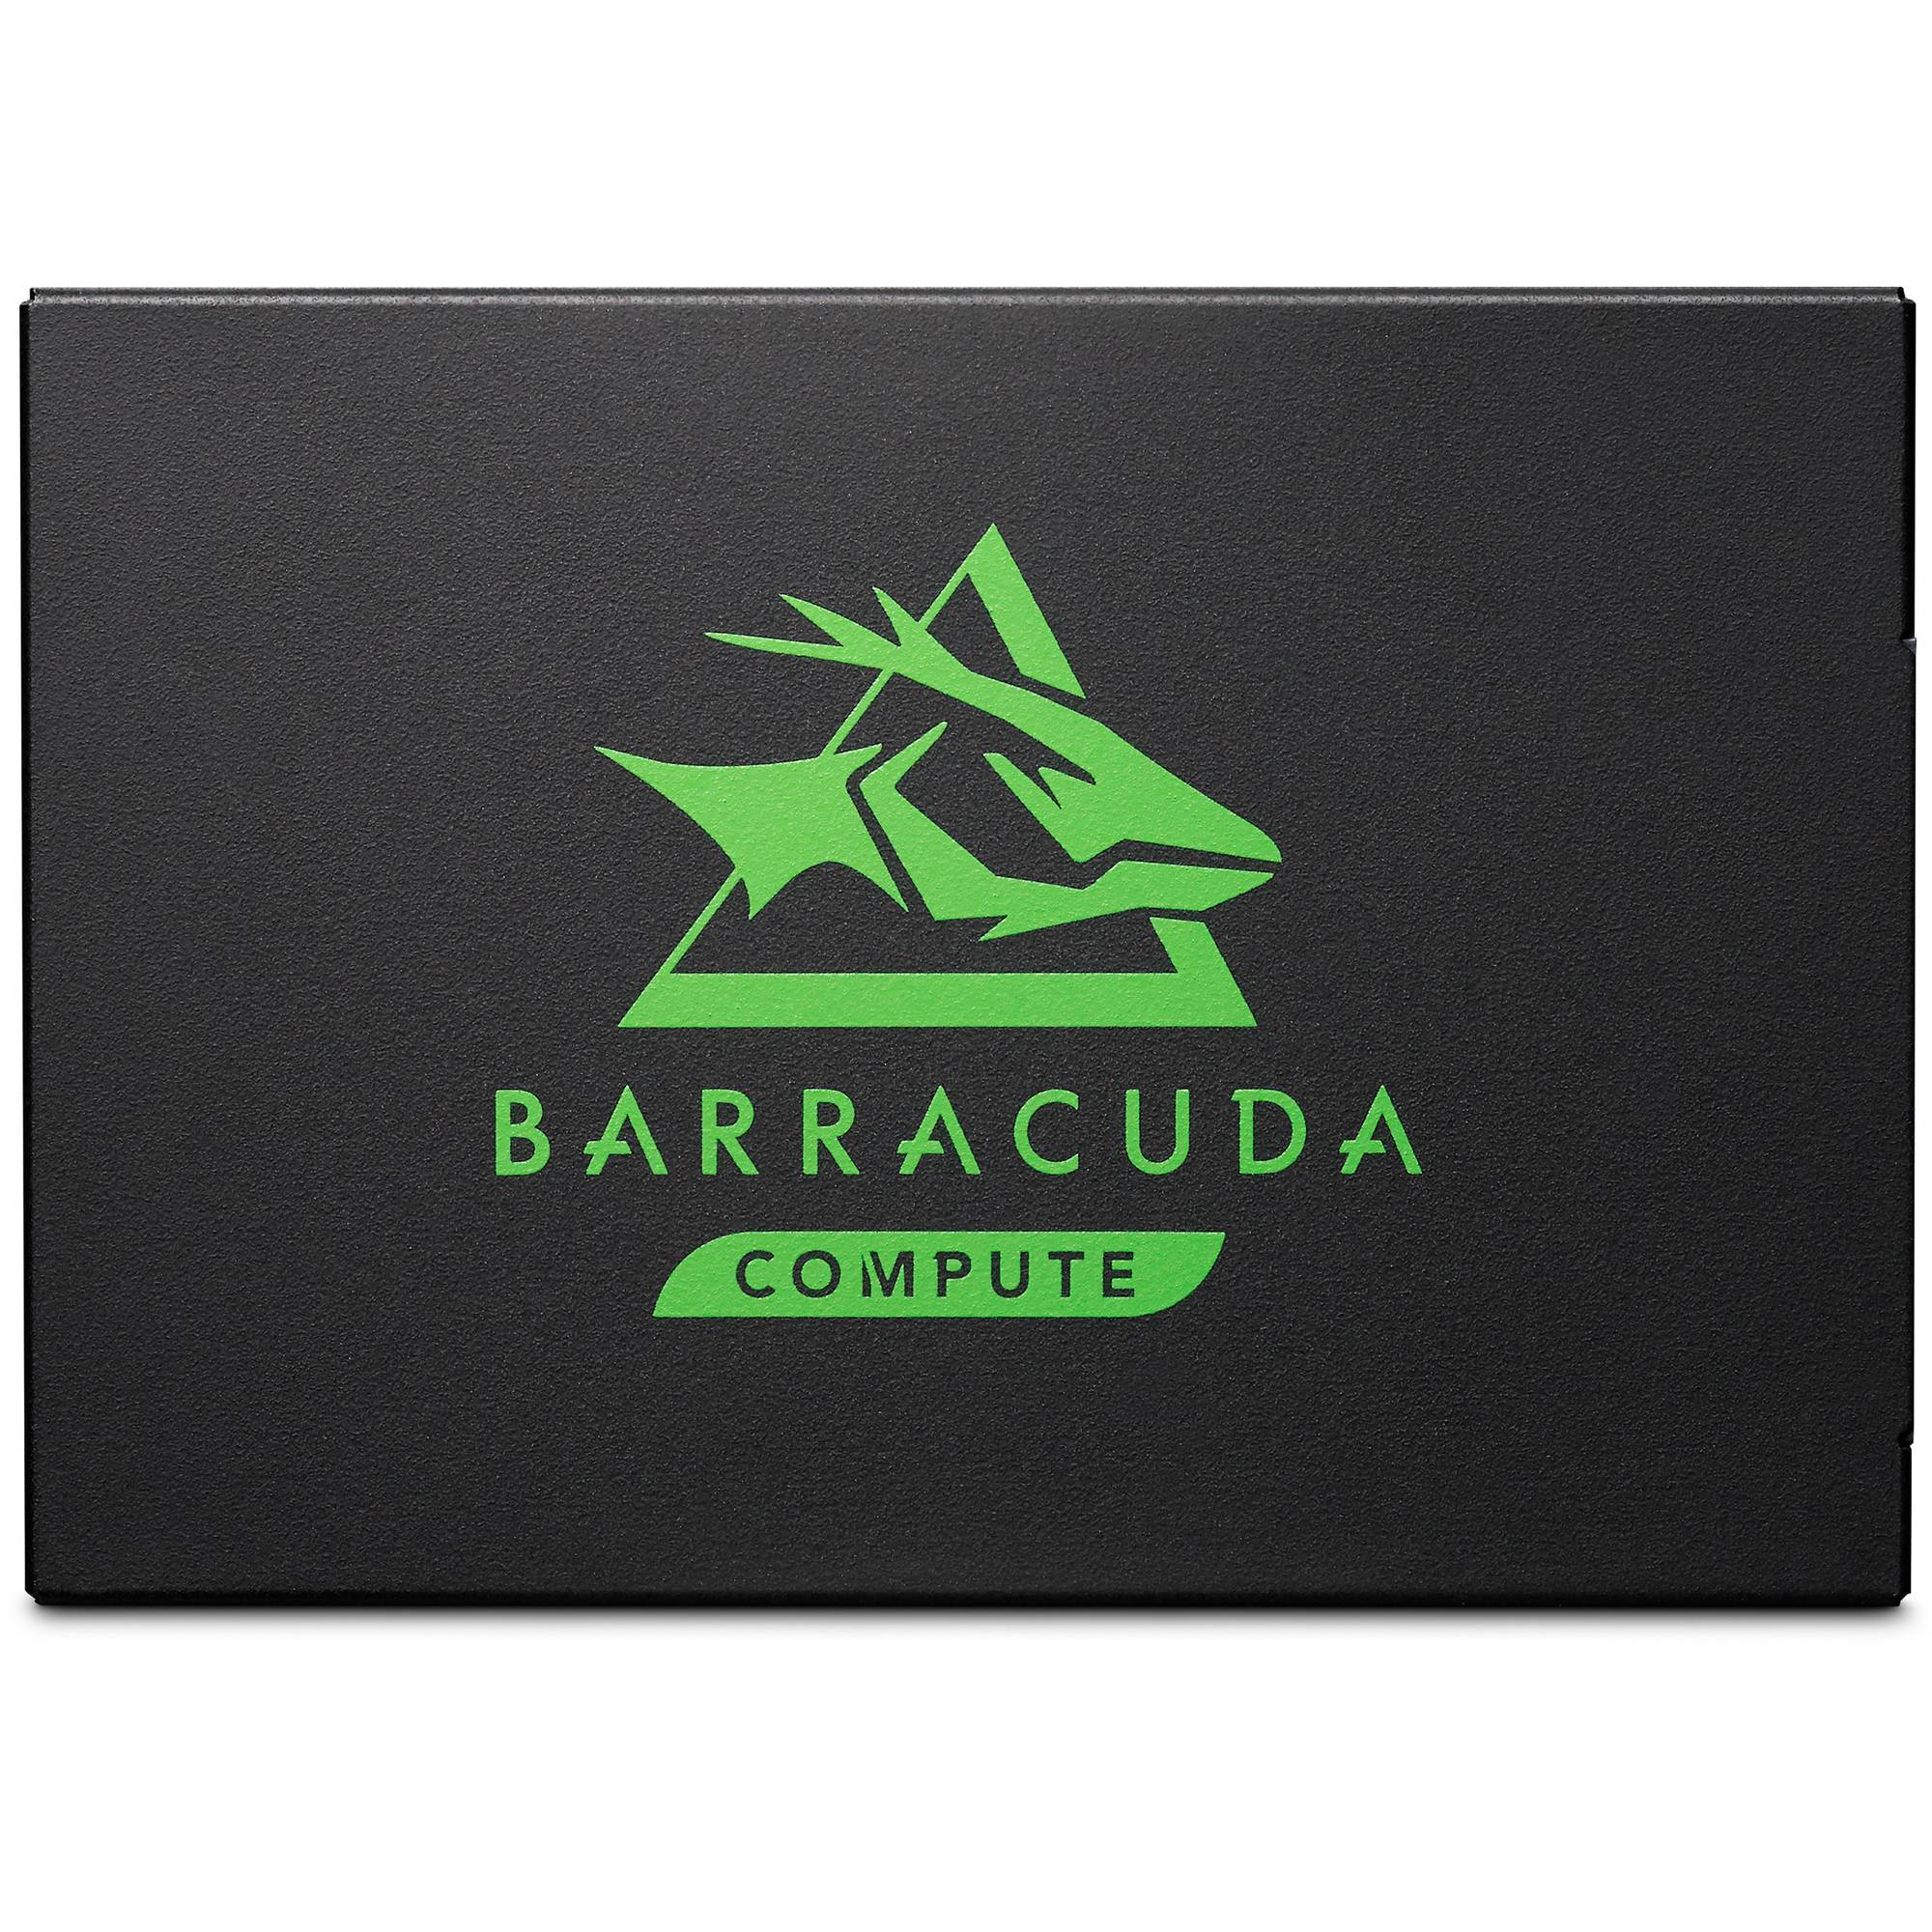 Seagate BarraCuda 120 ZA500CM10003 500GB SATA 6Gb/s 2.5in Refurbished SSD